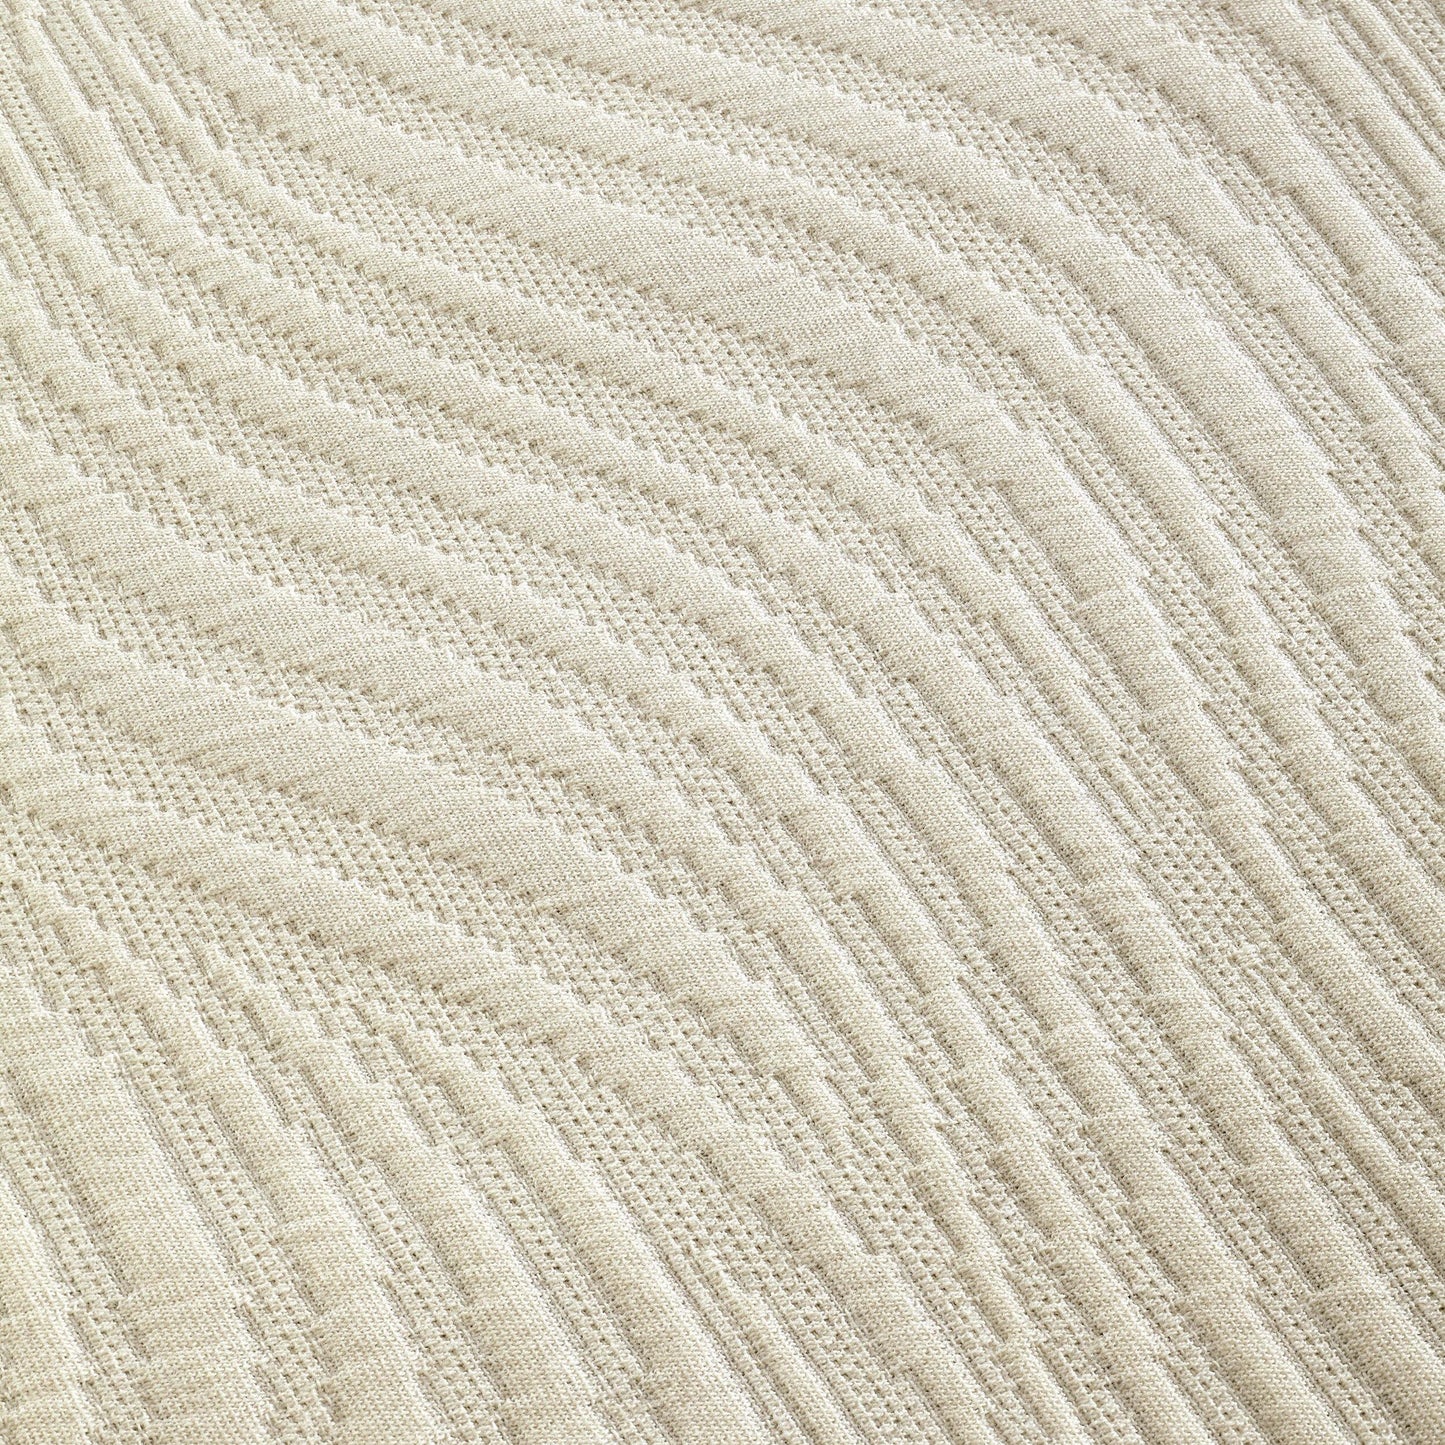 Cascade Cotton Jacquard Matelassé 3-Piece Bedspread Set FredCo